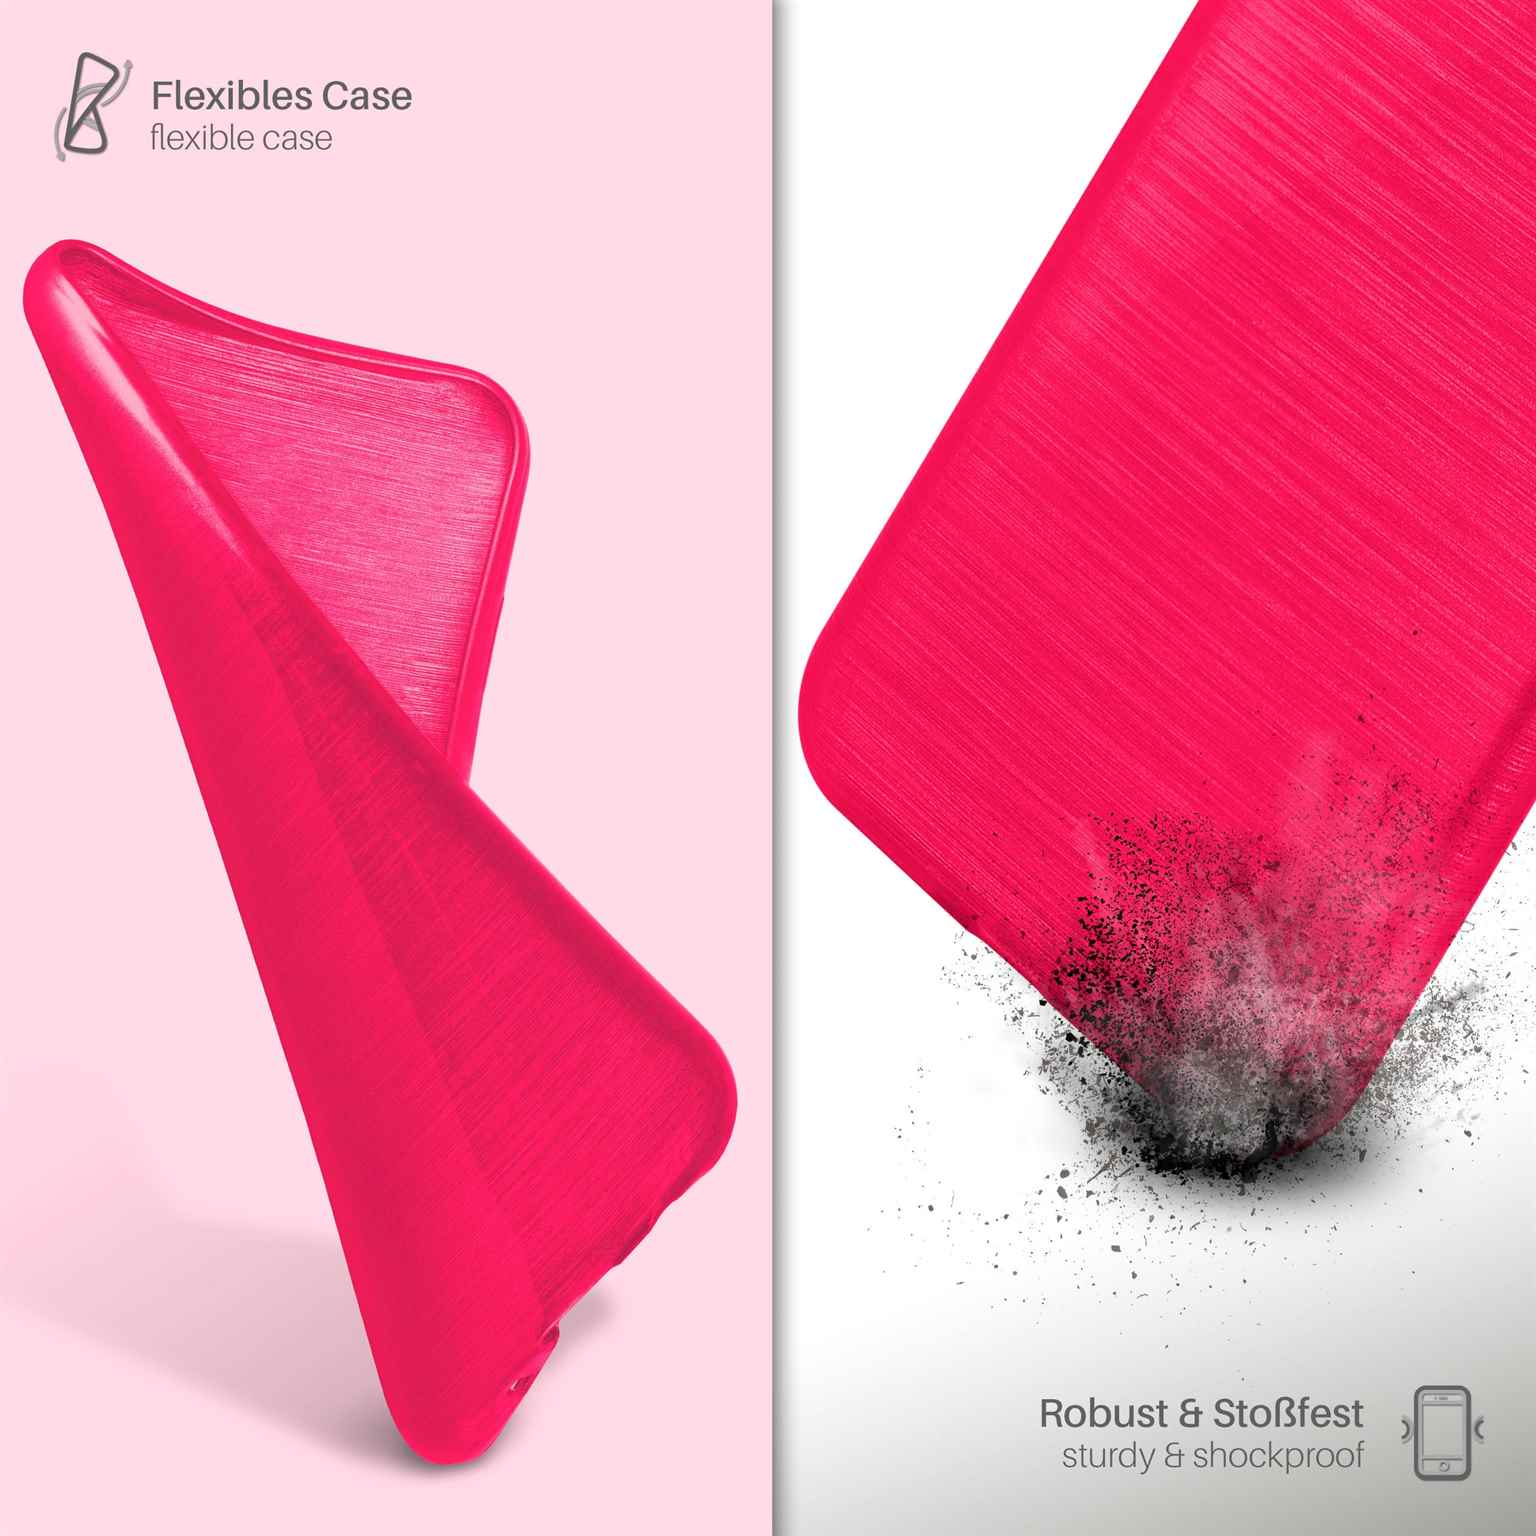 MOEX Brushed Case, Magenta-Pink iPhone Backcover, Apple, 7